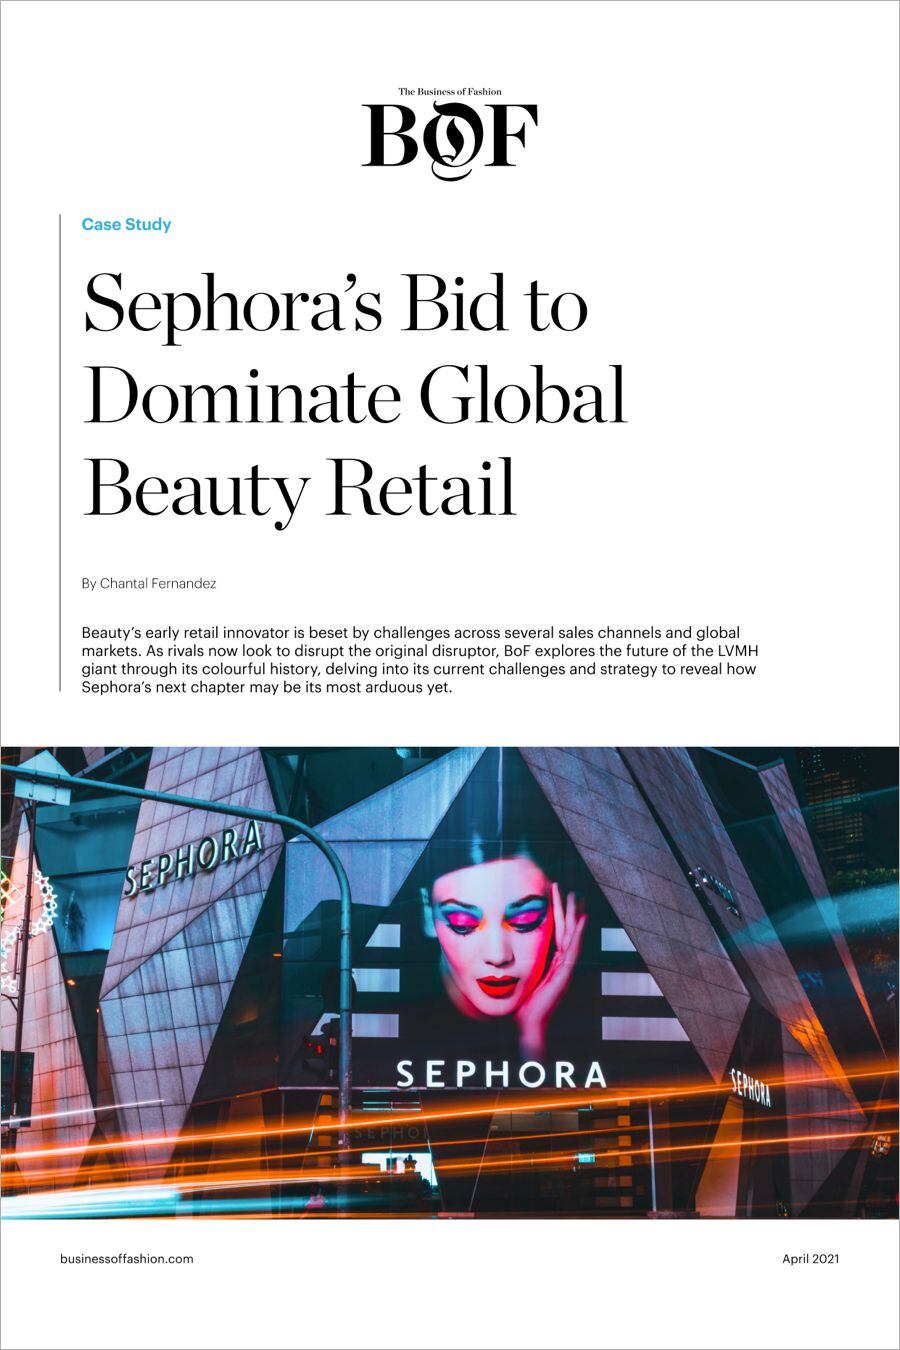 Case Study, Sephora's Bid to Dominate Global Beauty Retail